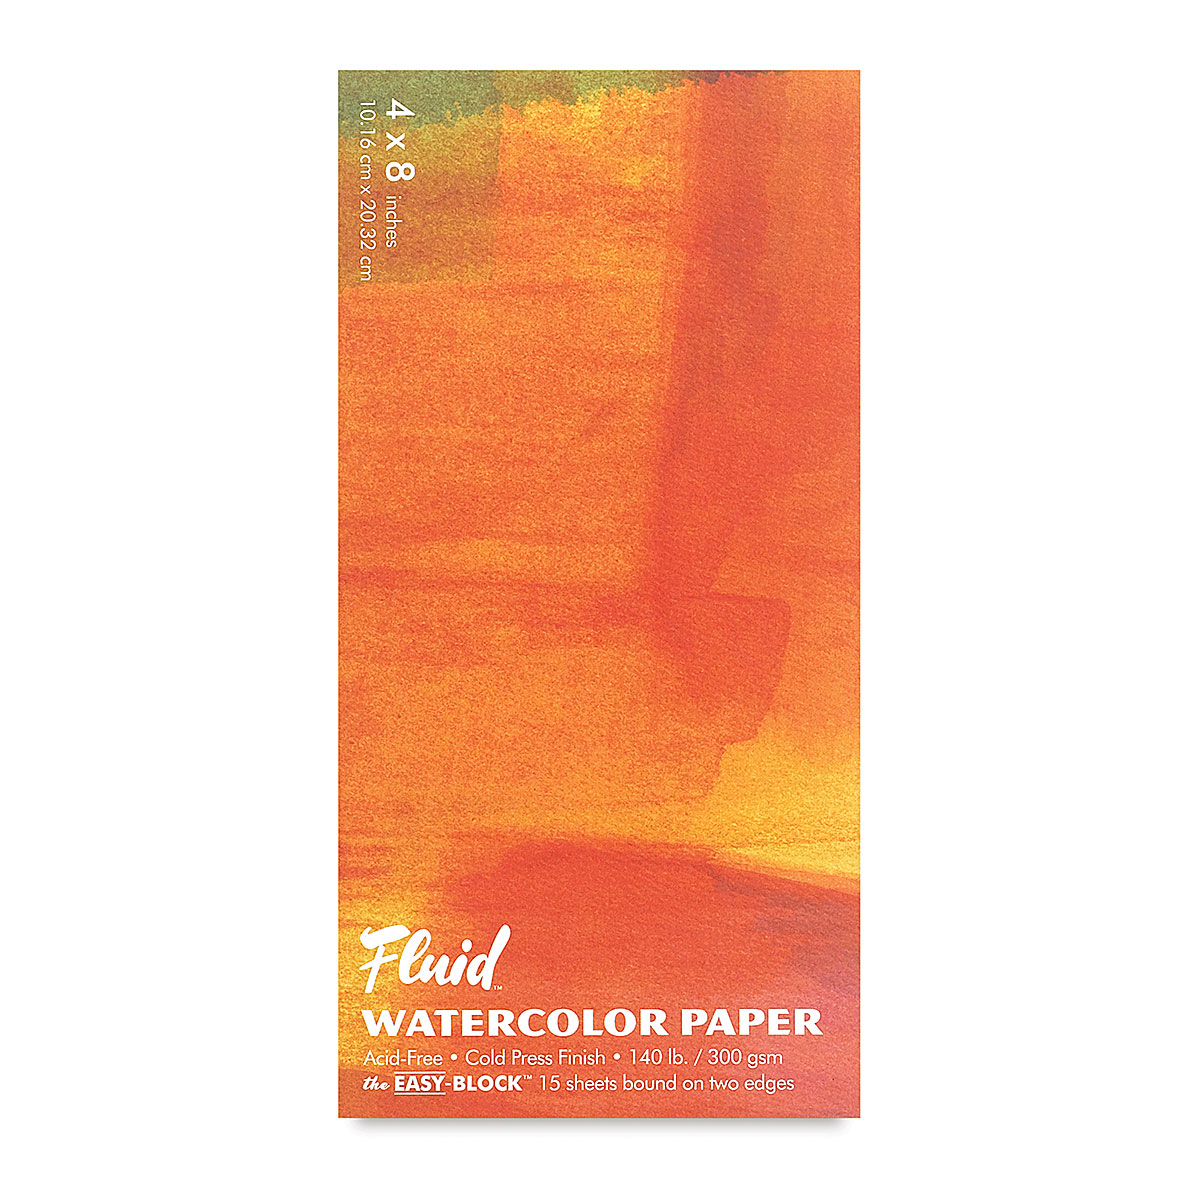 Fluid Hot Press Easy Block Watercolor Paper, 9 X 12 Inches, 15